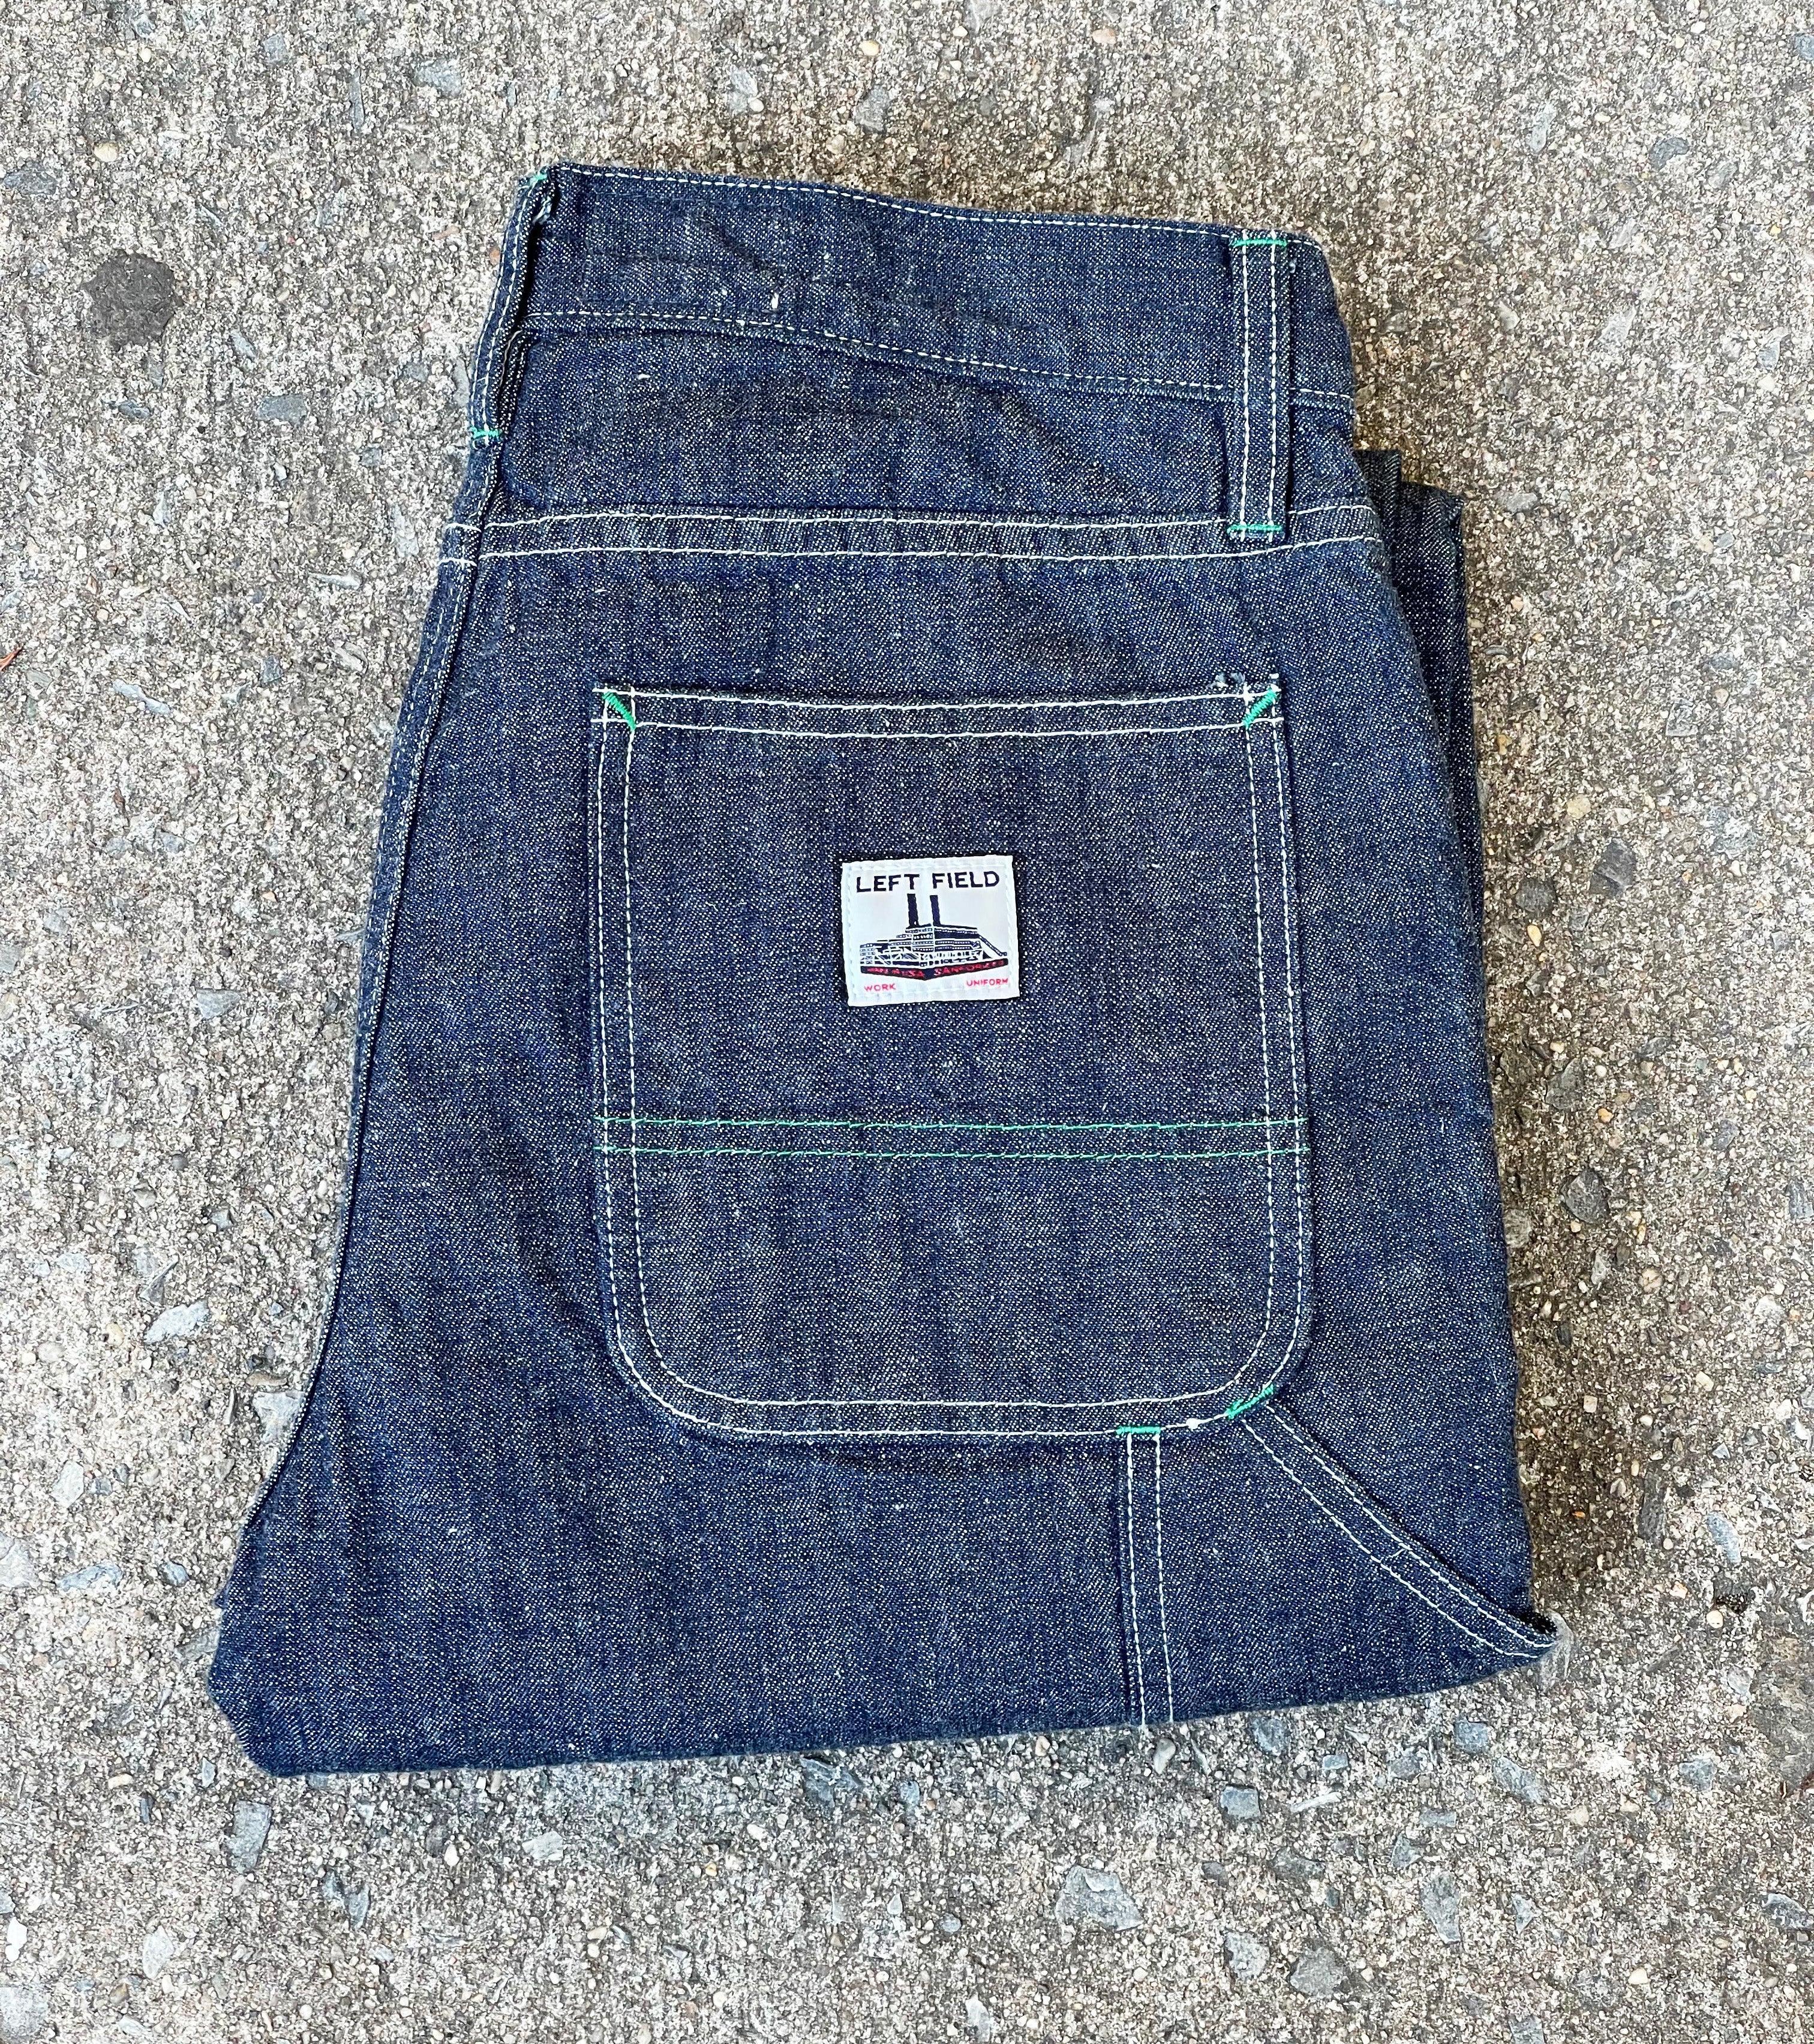 Bedst tekst Settle 11.5 oz Selvedge "Jelt" Double knee Carpenter Jeans, Left Field X Blue –  Left Field NYC